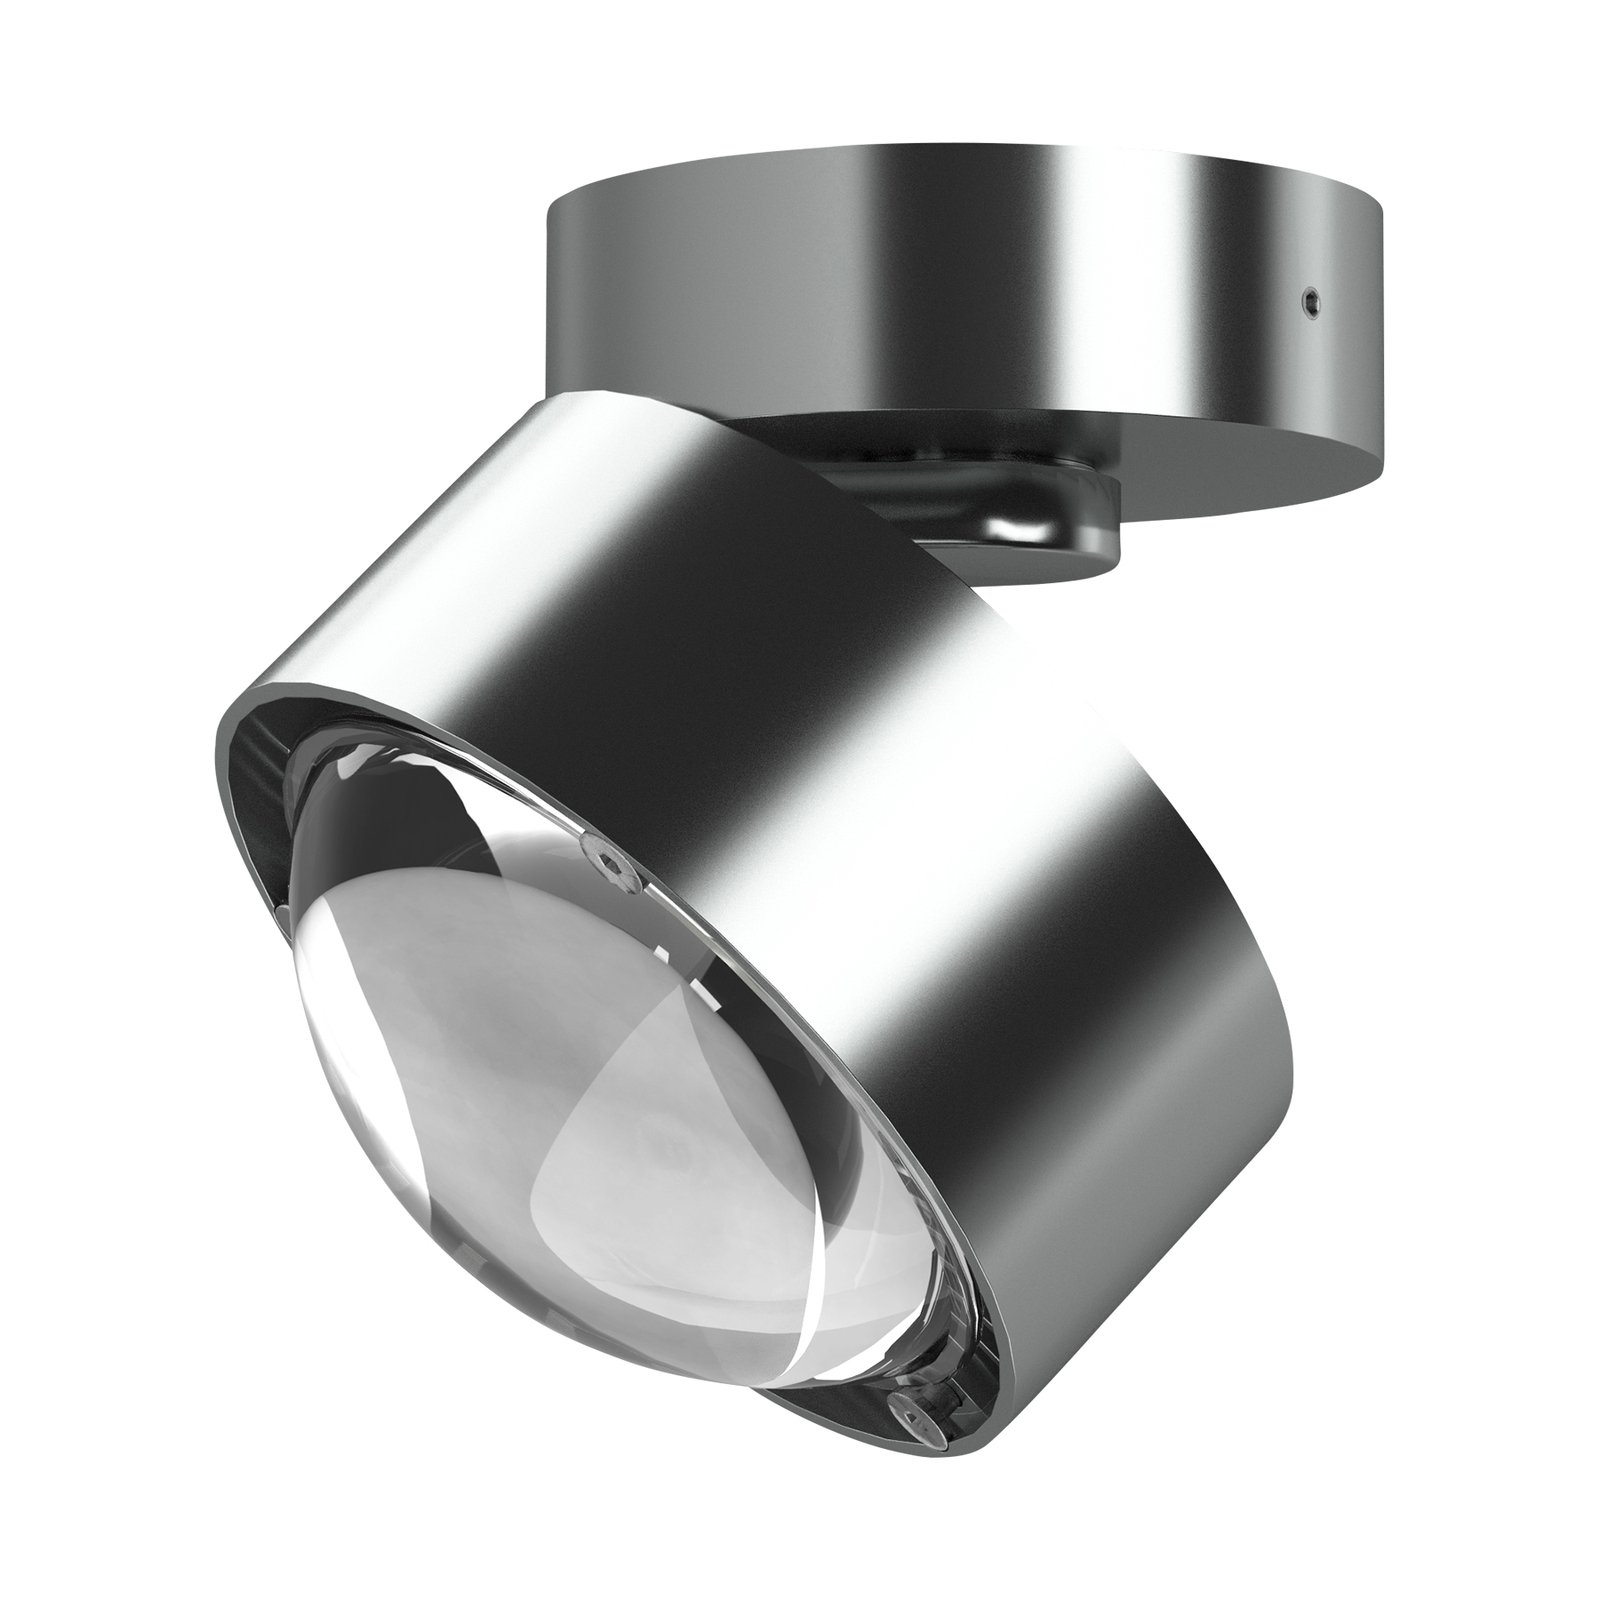 Puk Mini Move LED, lente transparente, cromado mate